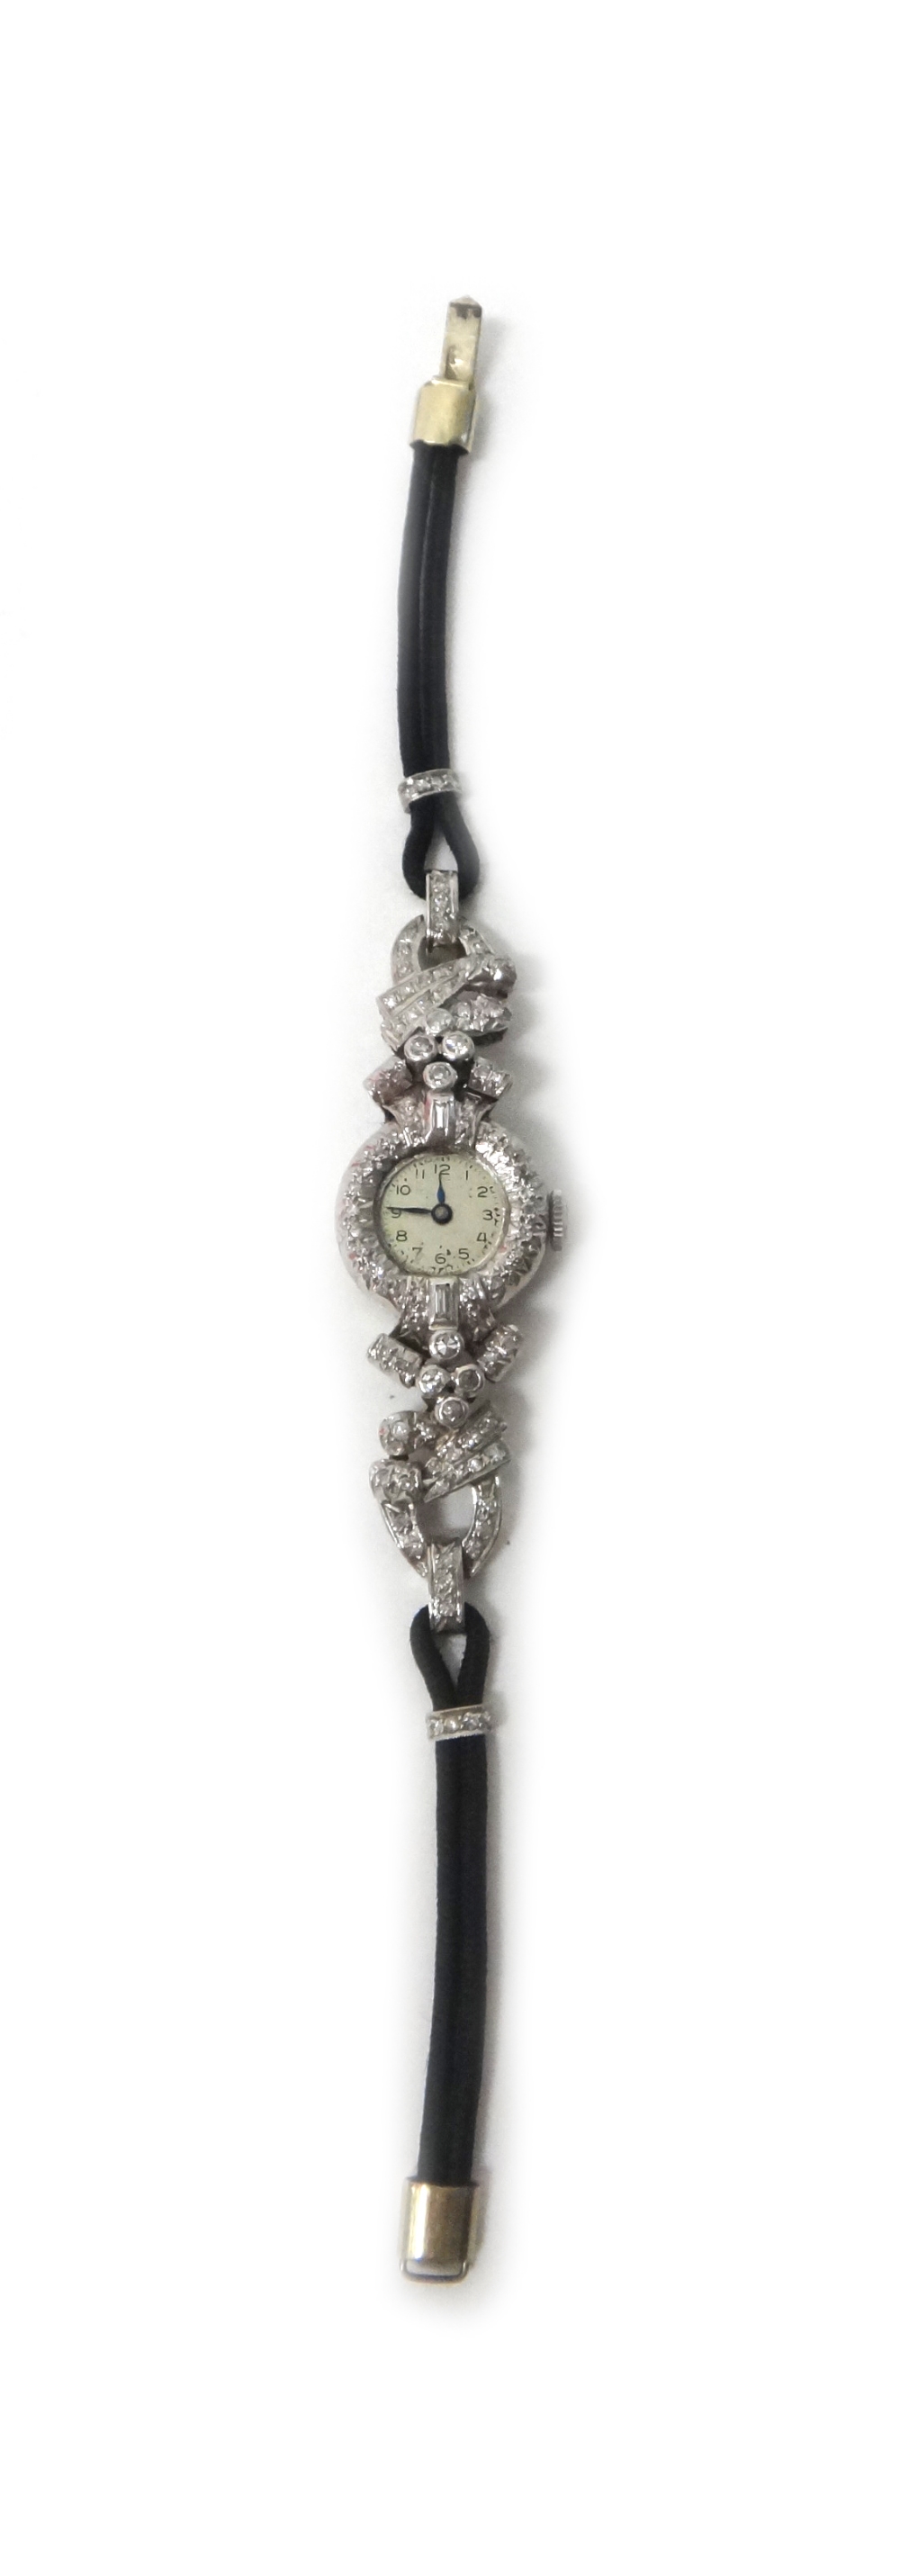 A lady's diamond set dress wristwatch, with an associated jewelled Swiss movement,